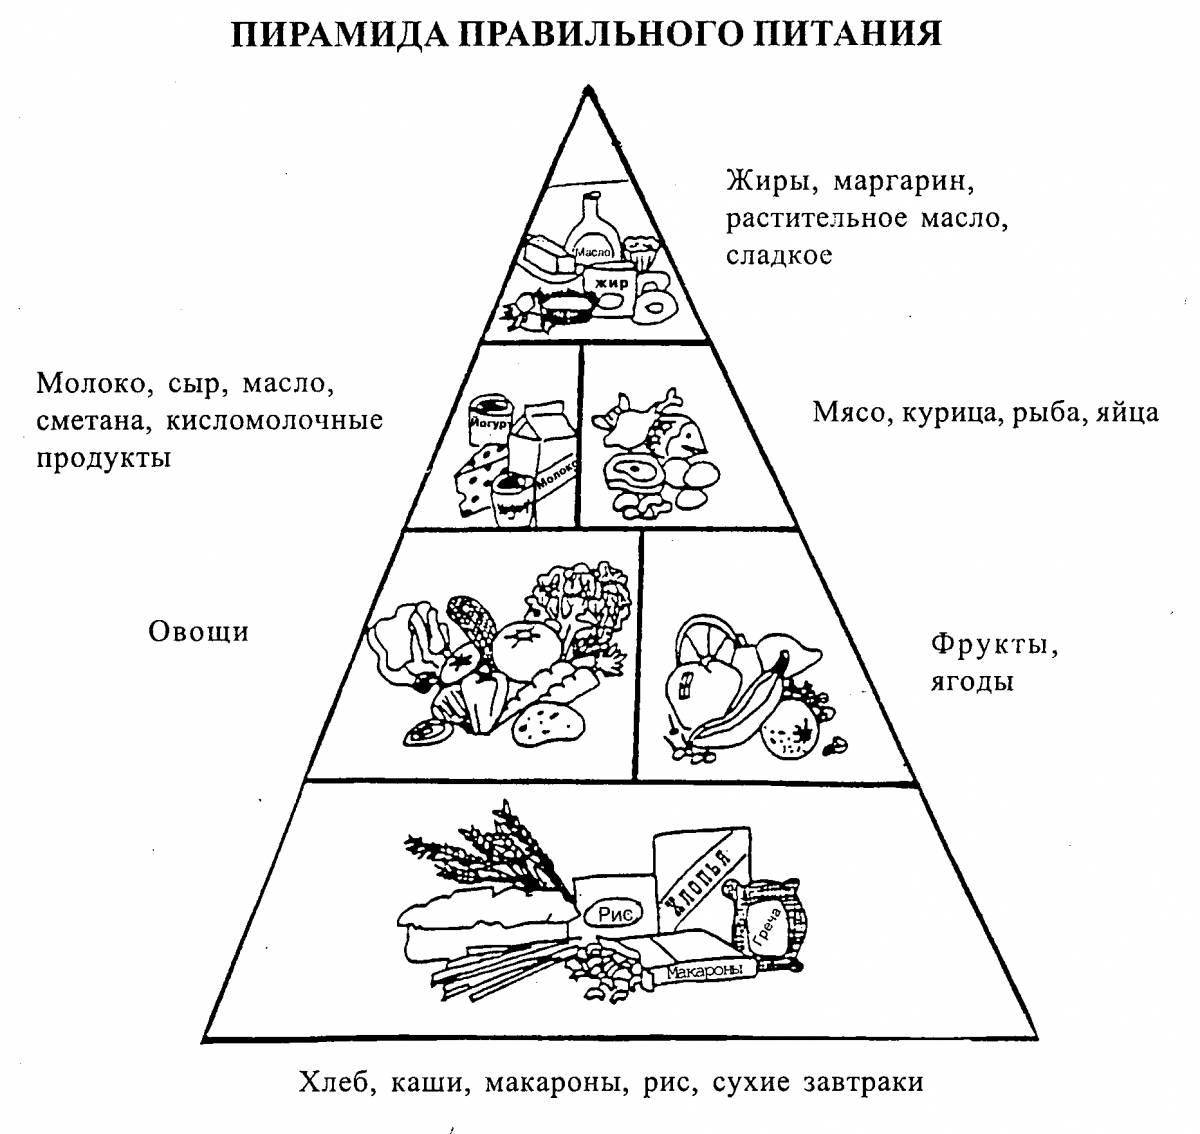 Food pyramid #9